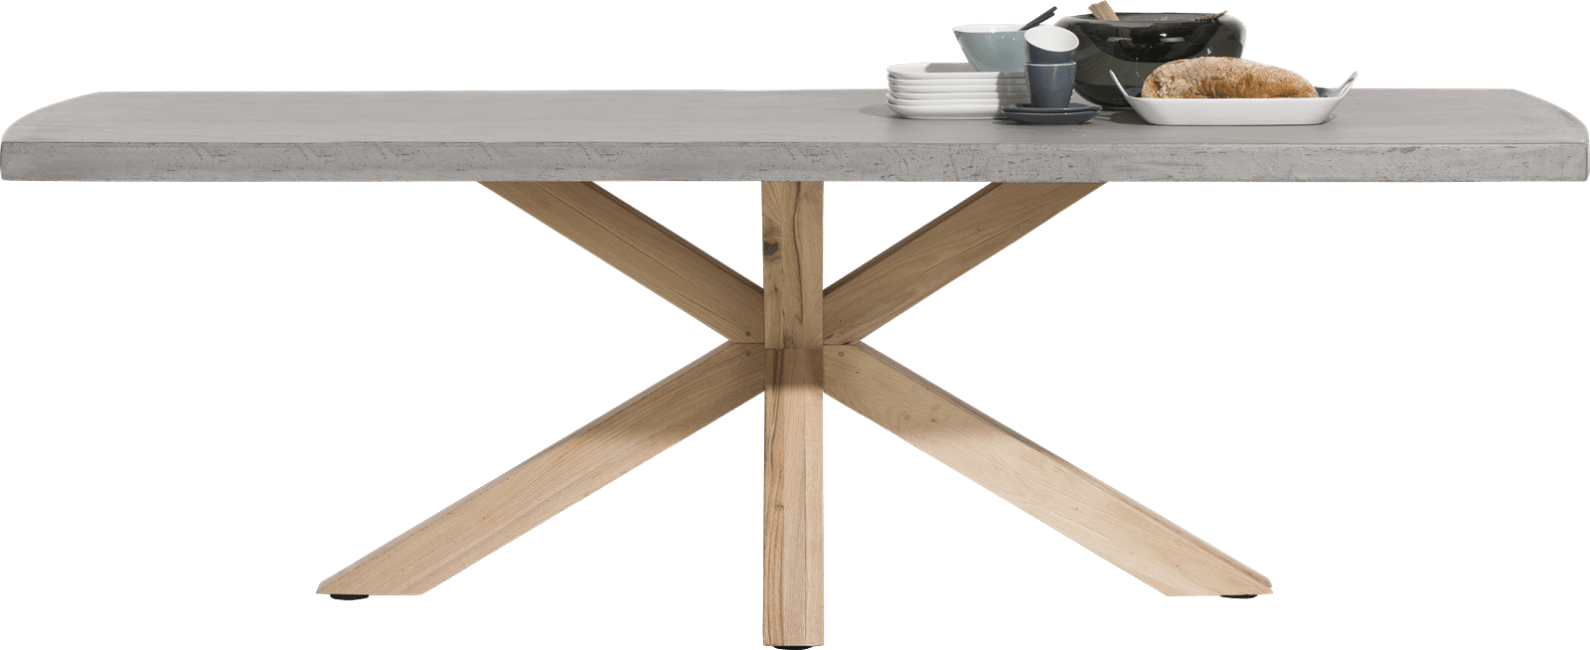 H&H - Maestro - Industriel - table 240 x 103 cm - plateau beton